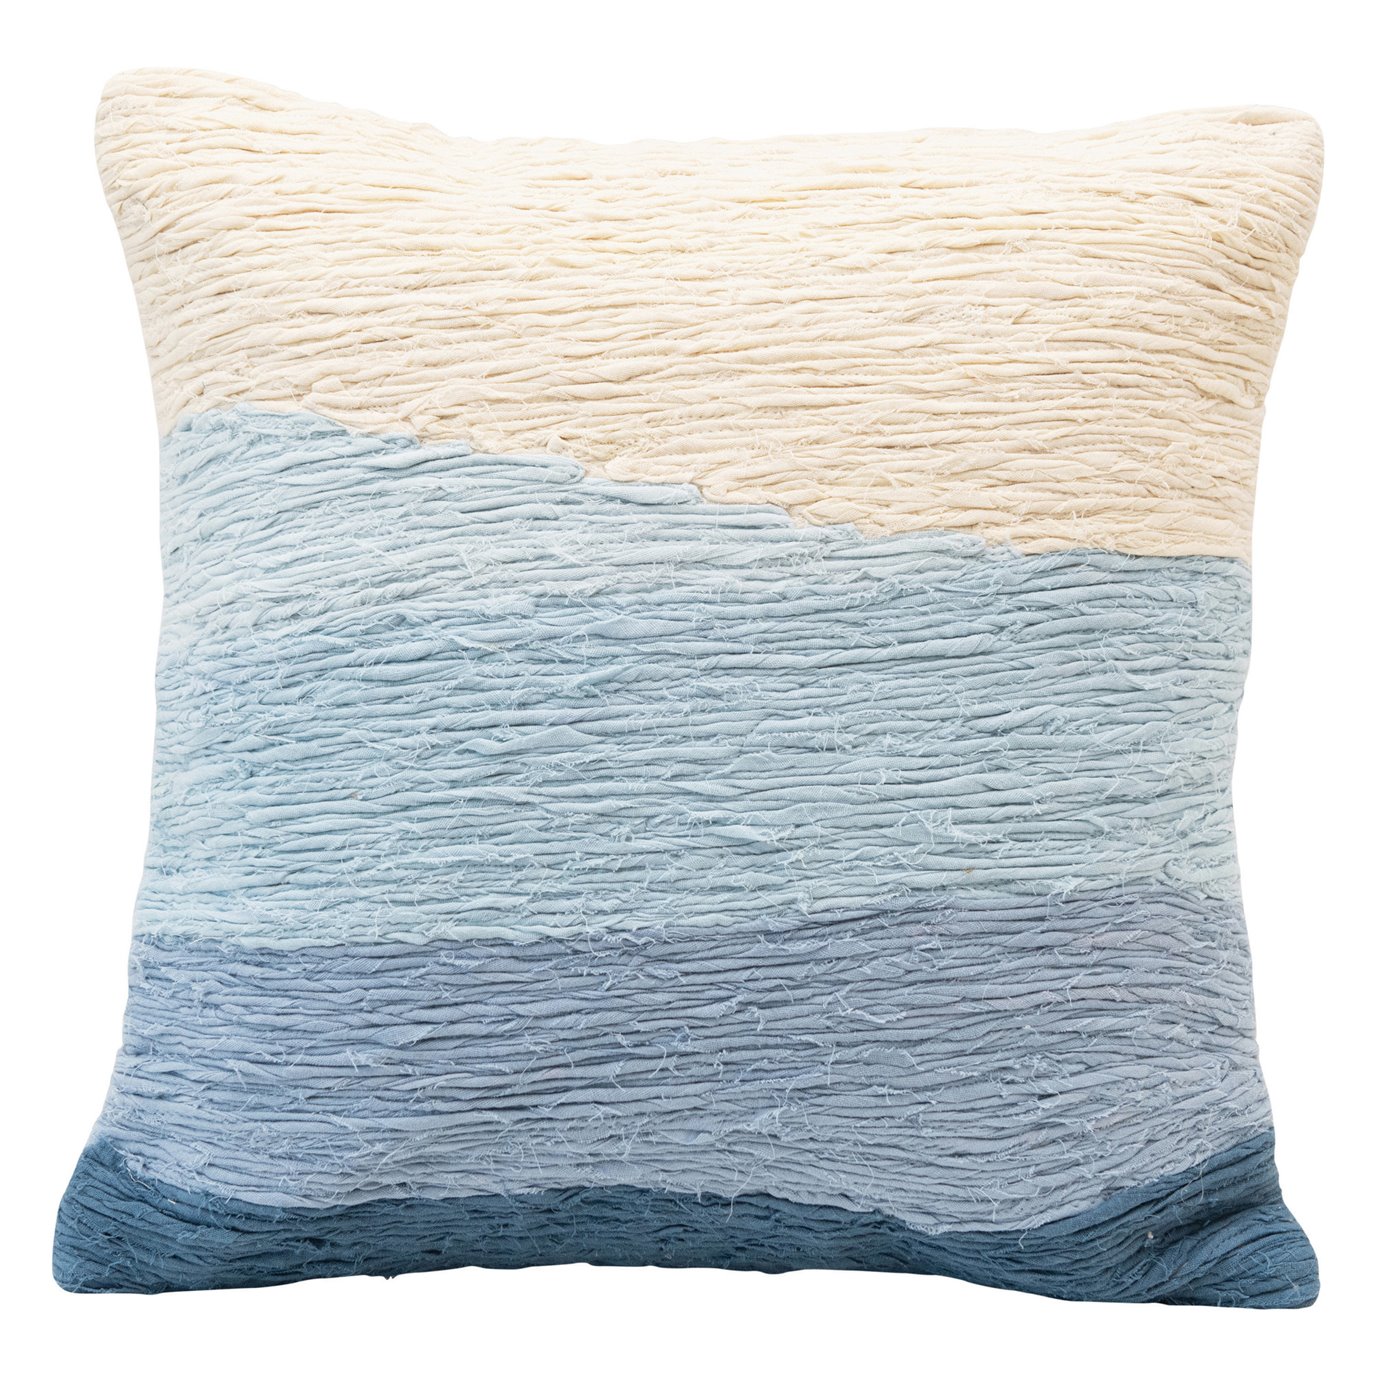 Cotton Appliqued Pillow with Wave, Blue Ombre